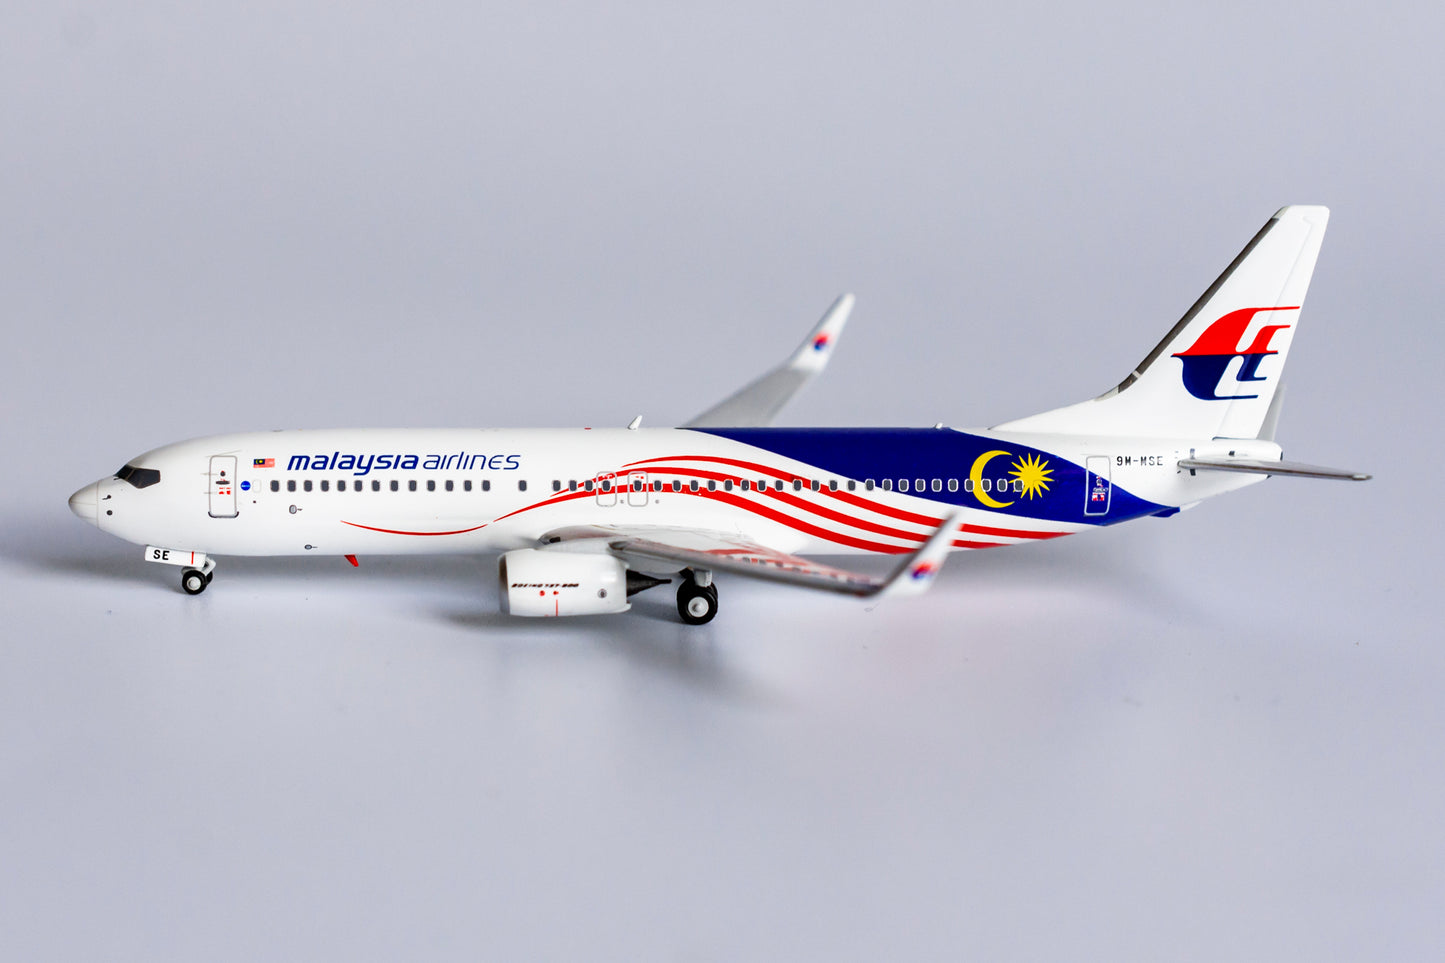 1:400 NG Models Malaysia Airways Boeing 737-800 "Negaraku Colors" 9M-MSE 58103